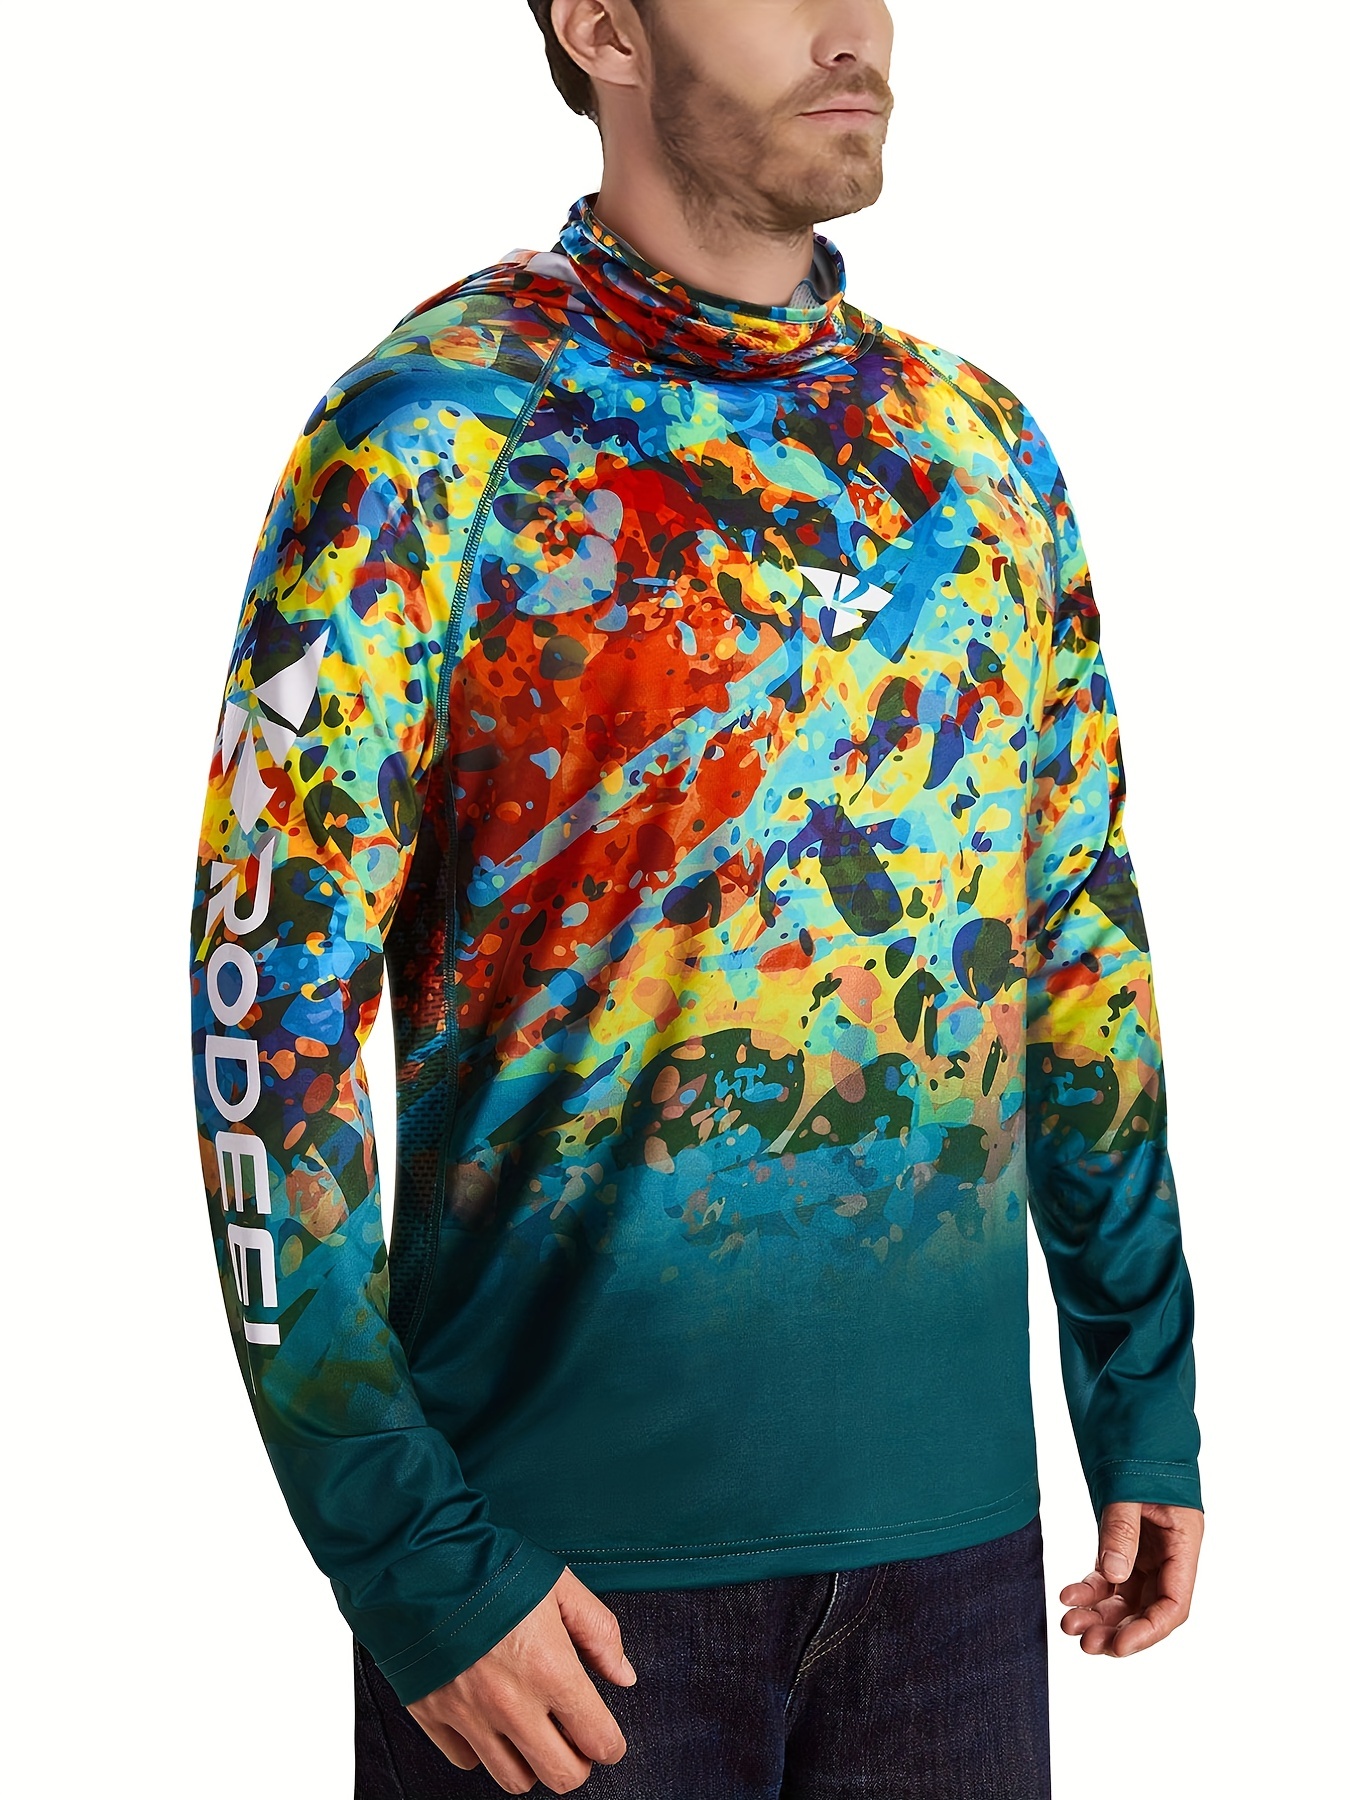 PEALGIC Men's Fishing Hoodie Performance Shirt Long Sleeve Uv Protection  Fish T-shirt Outdoor Summer Upf 50+ Angling Wear Equip - AliExpress